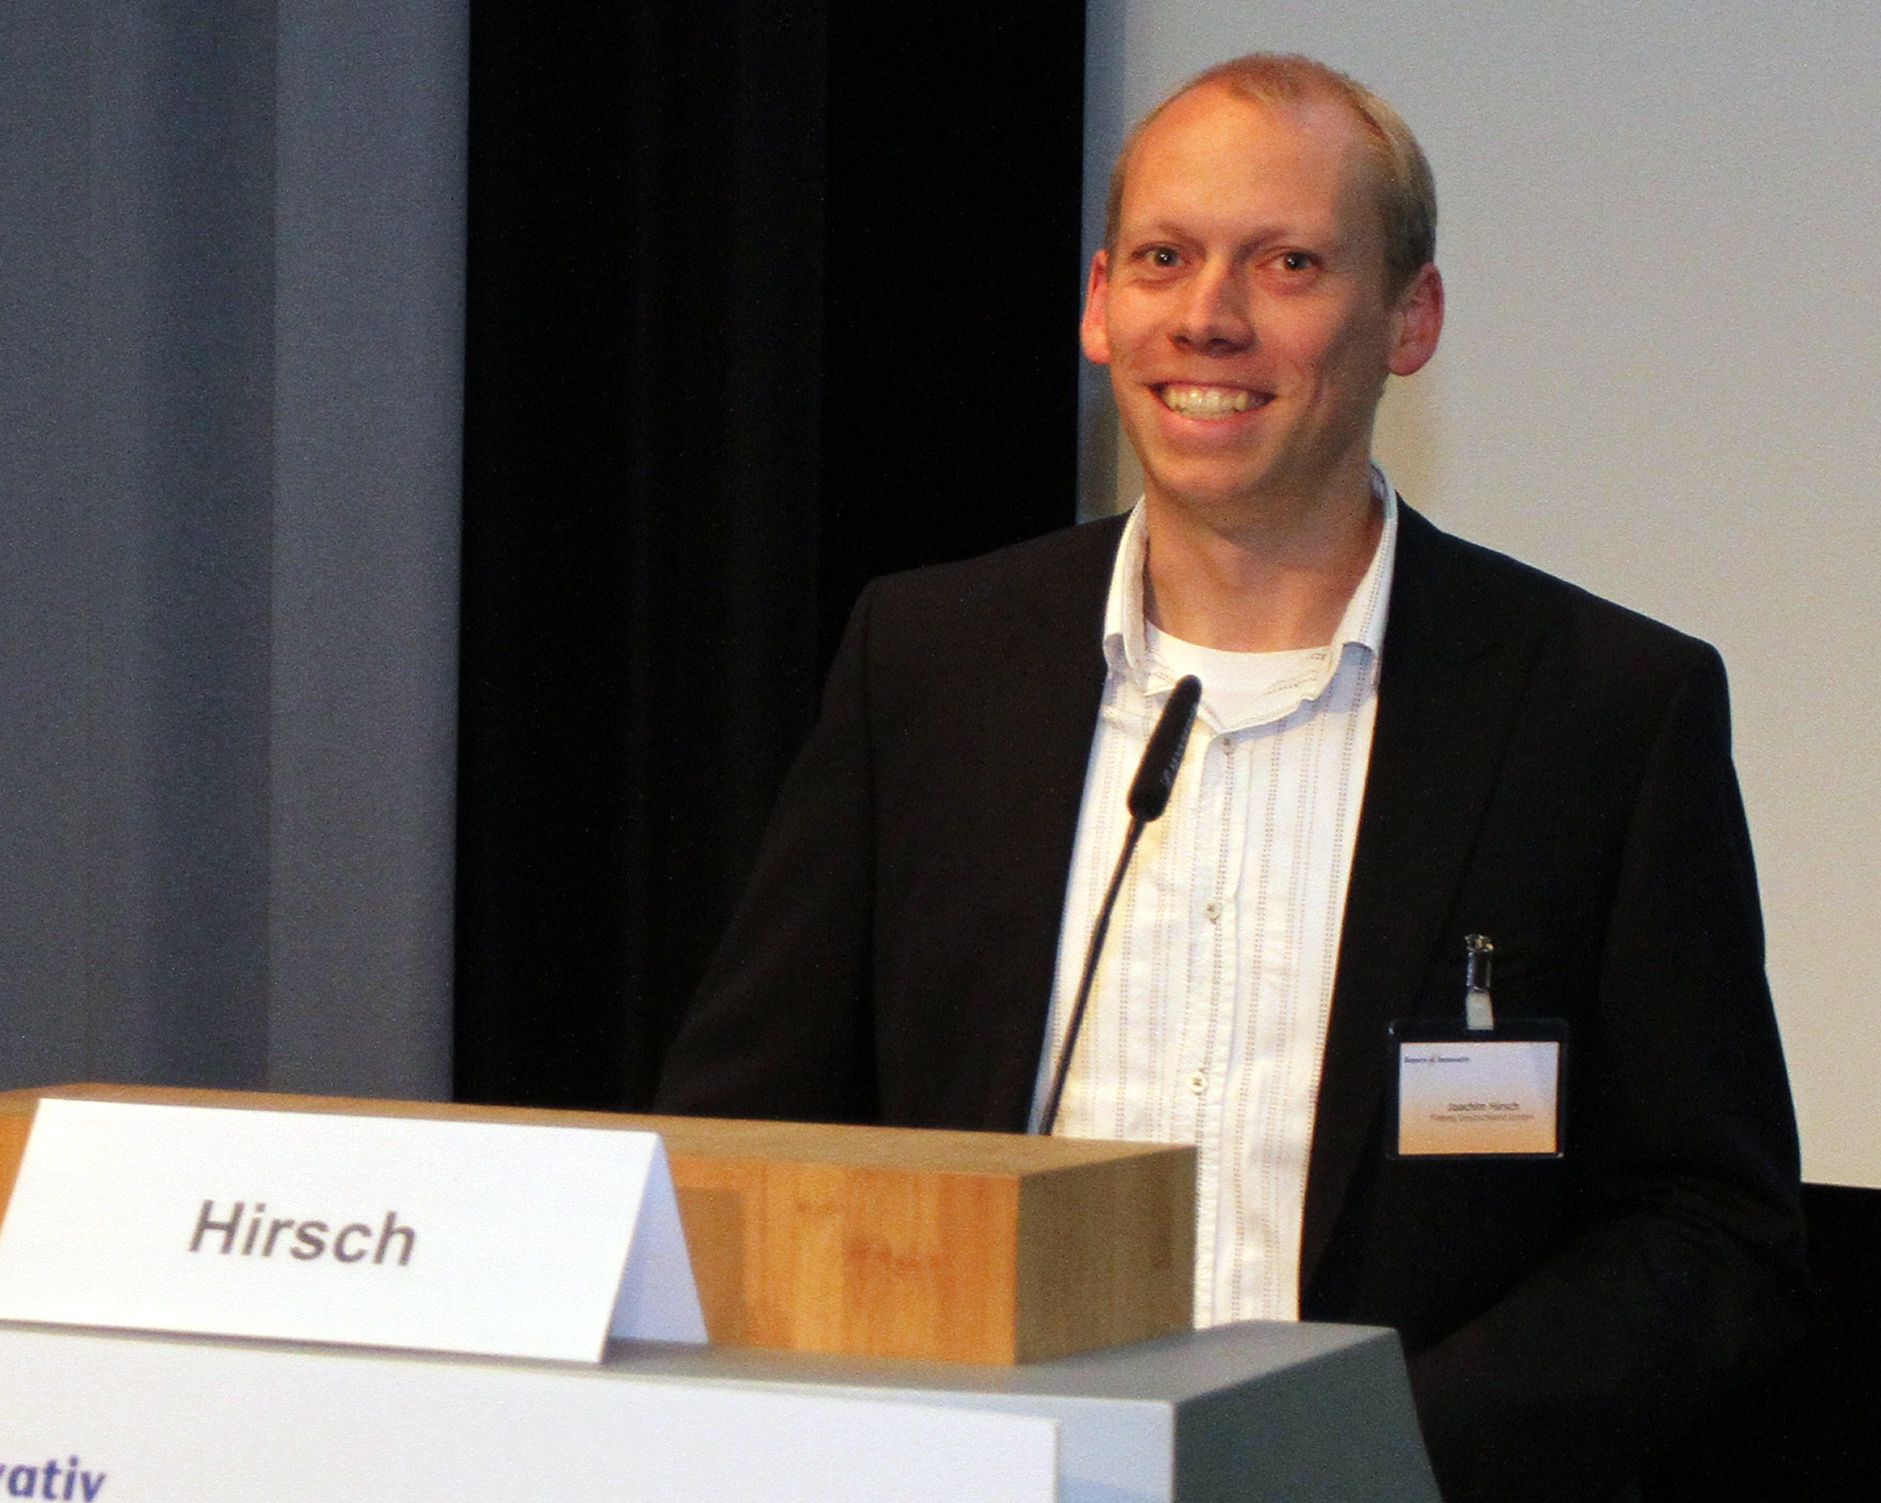 Joachim Hirsch, Flabeg GmbH